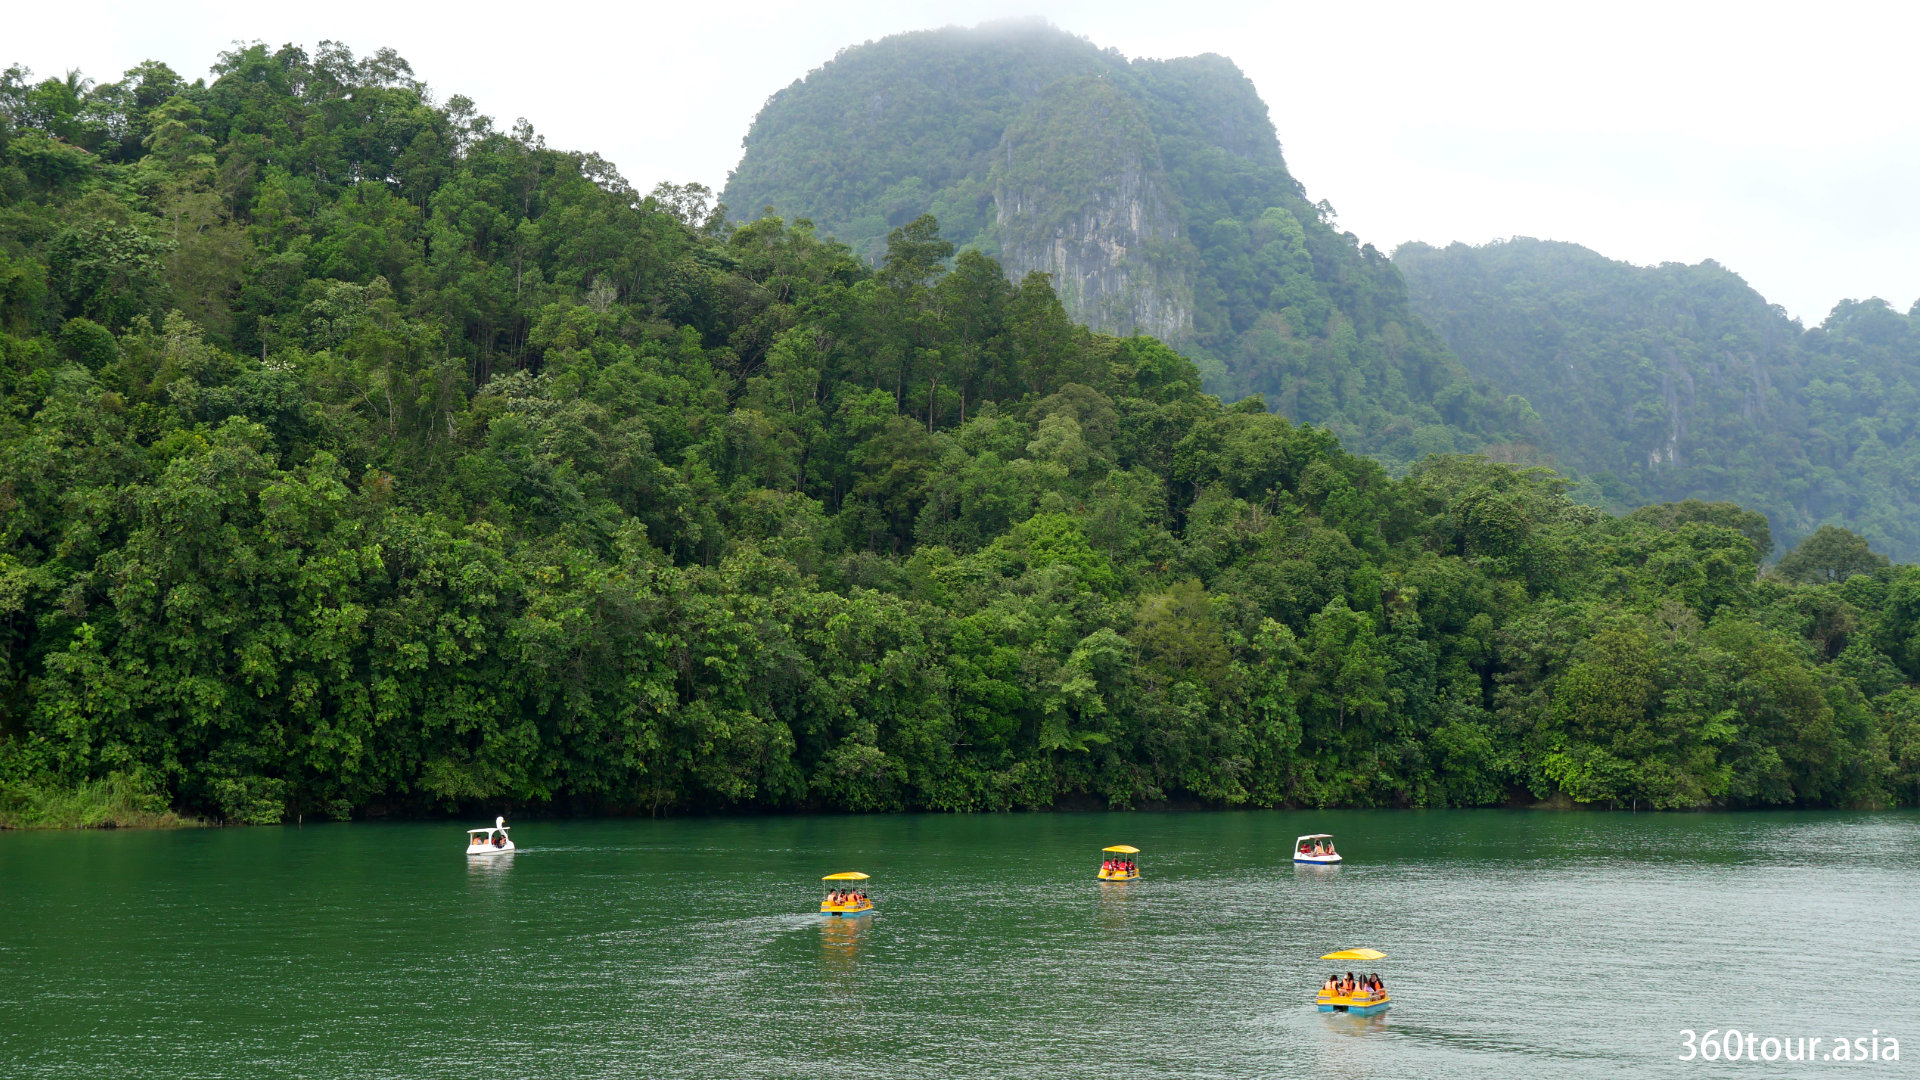 Tasik Biru, Bau, Sarawak | Blue Lake Boat Ride & Resort City